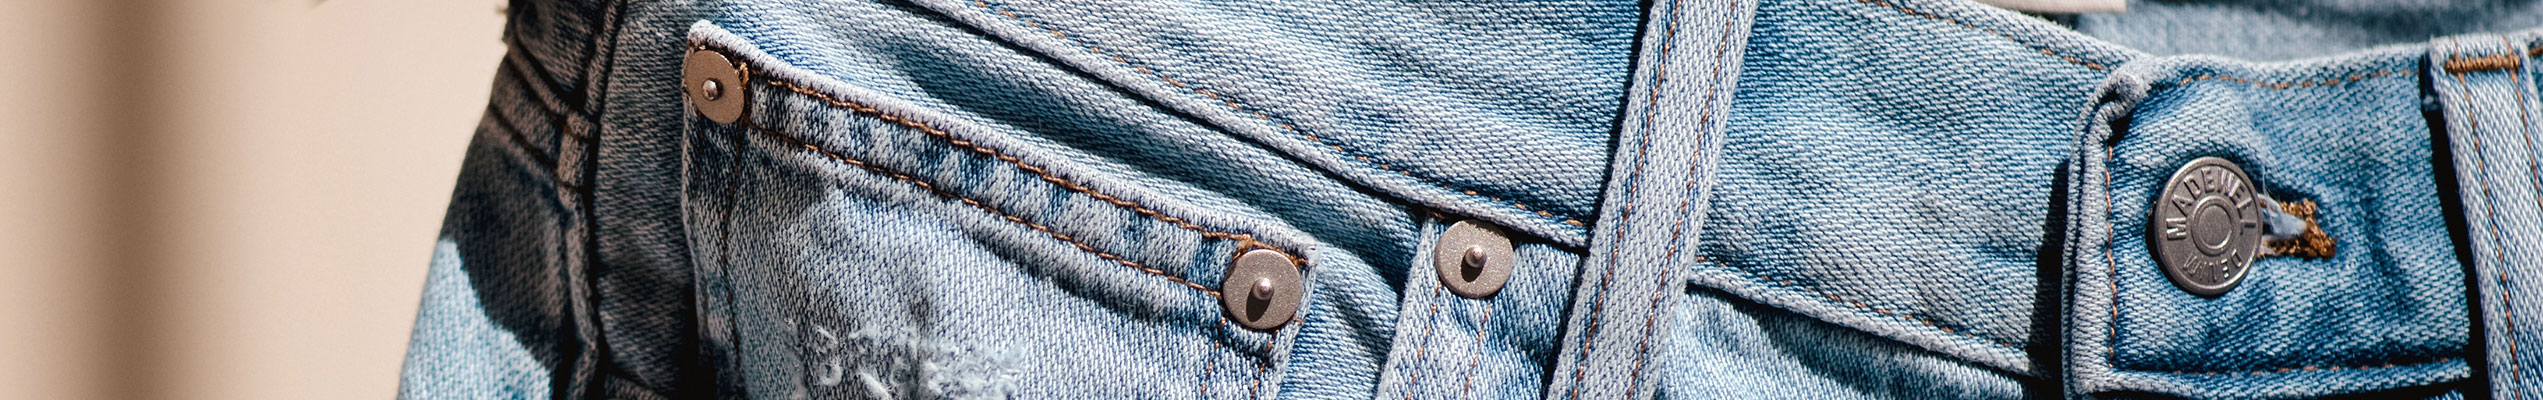 rivetti-jeans-online